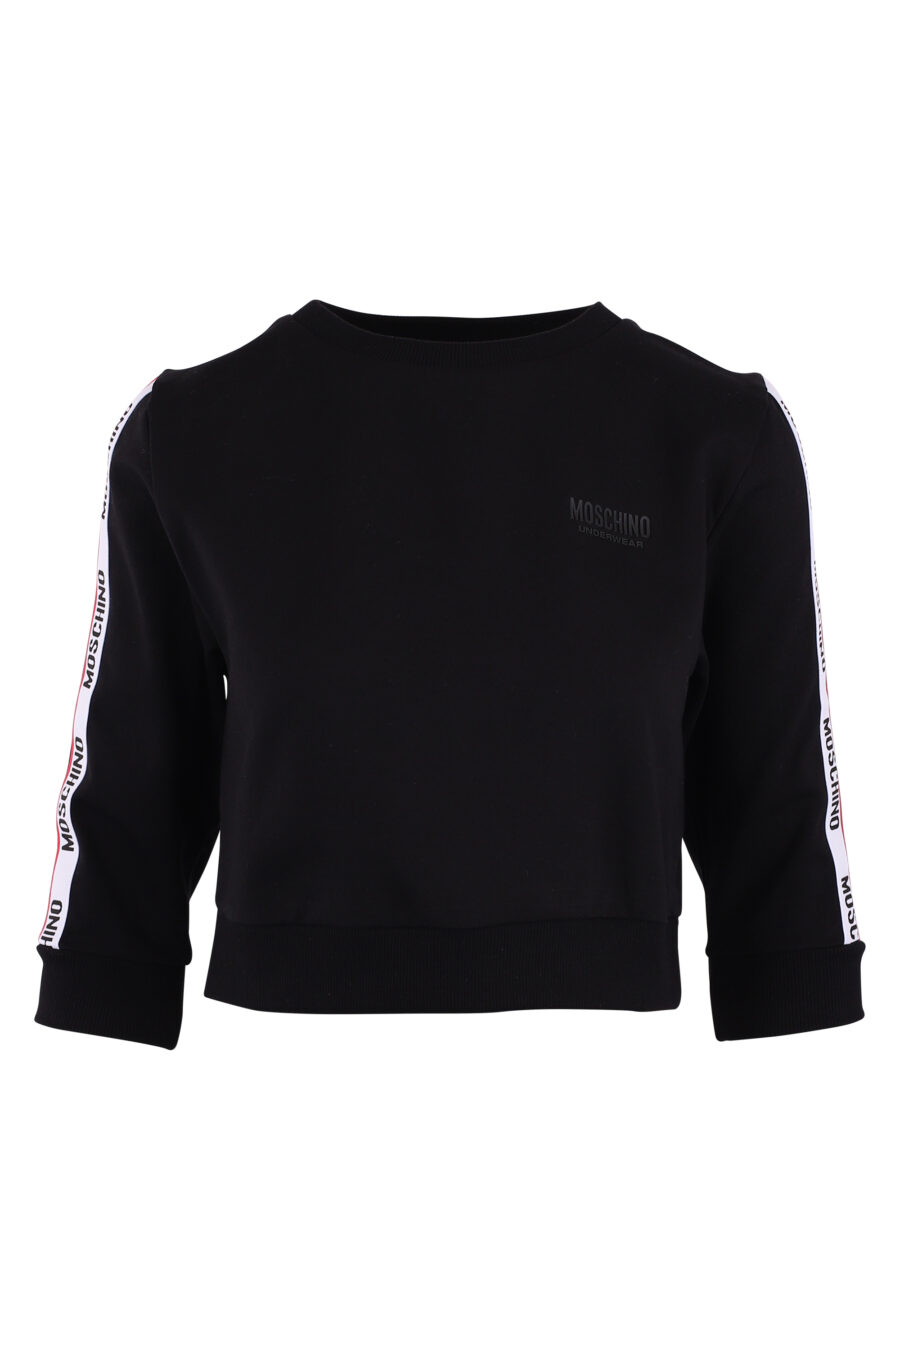 Black sweatshirt with ribbon logo on sleeves - IMG 6188